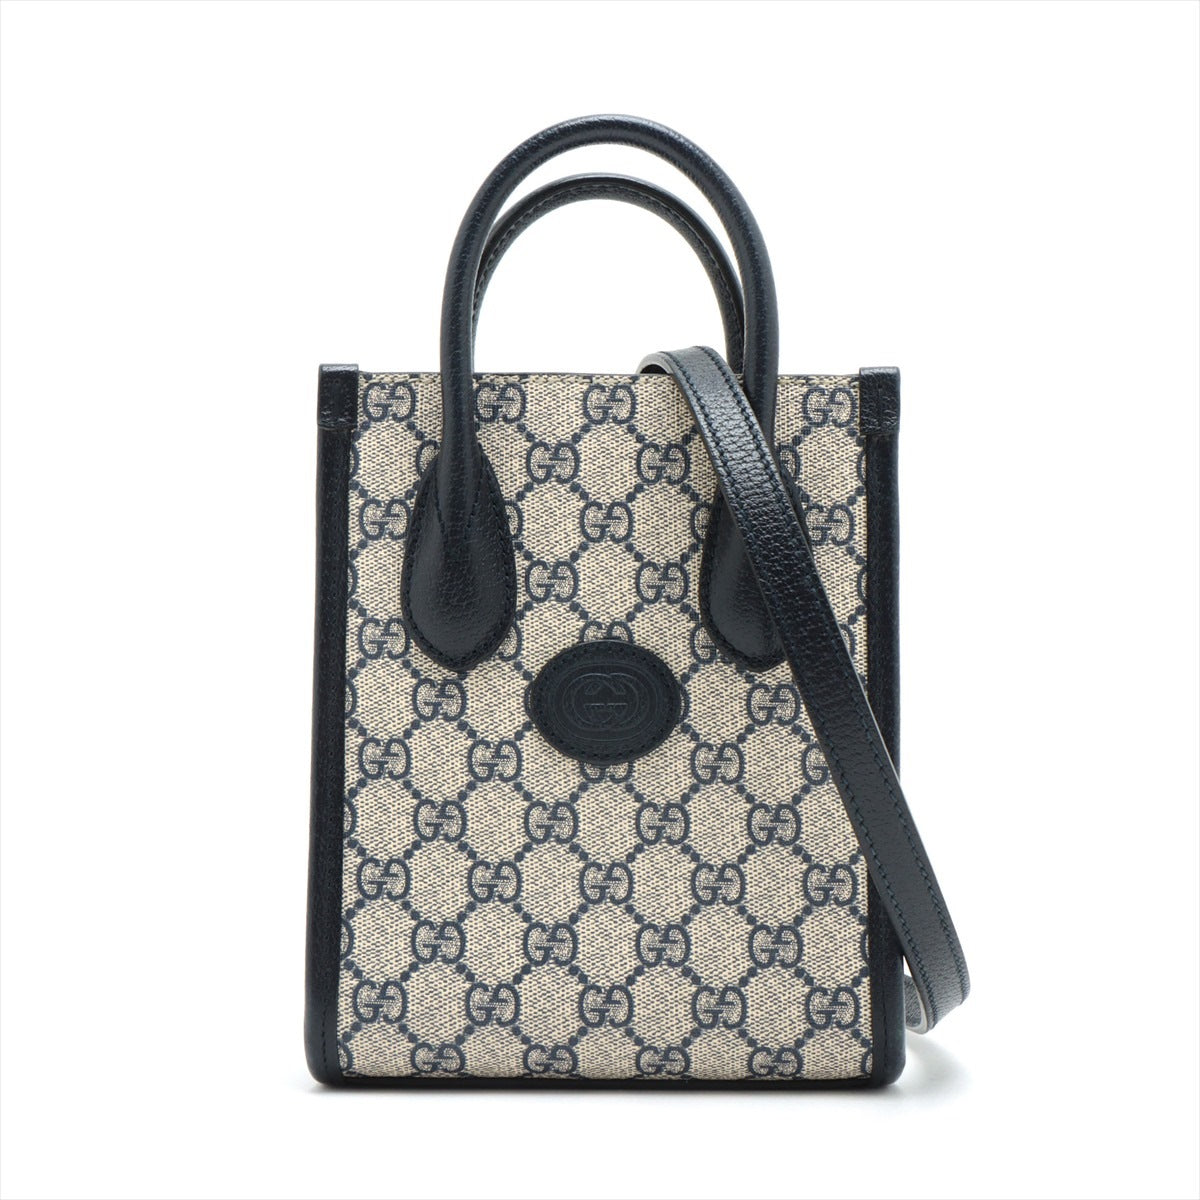 Gucci GG Supreme PVC & leather 2way handbag Navy blue 671623